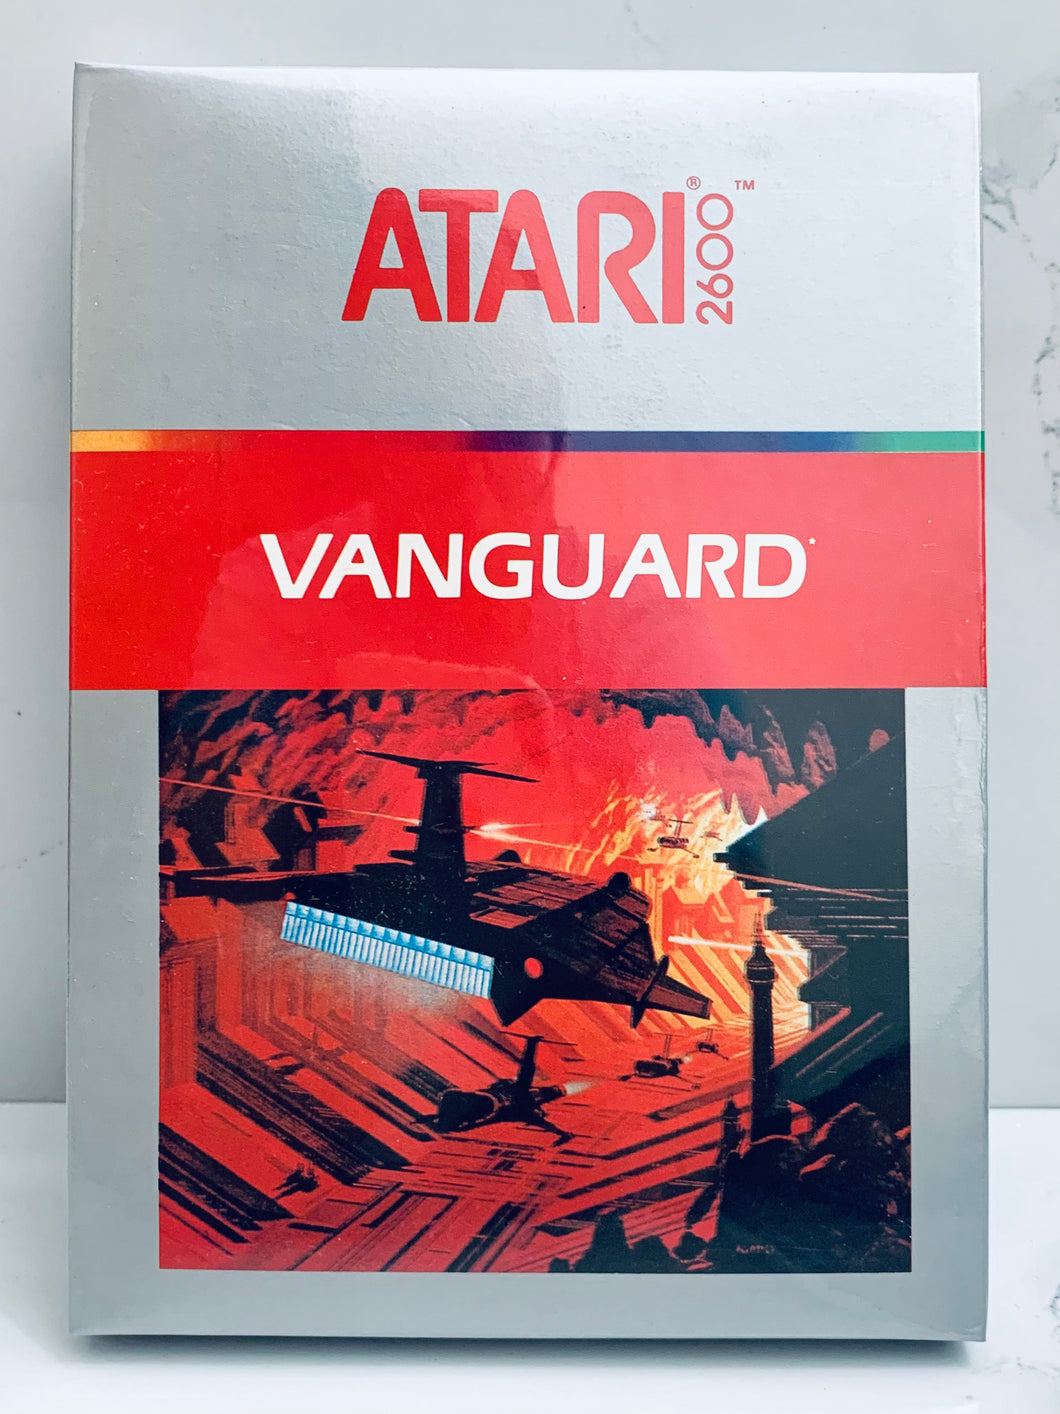 Vanguard - Atari VCS 2600 - NTSC - Brand New